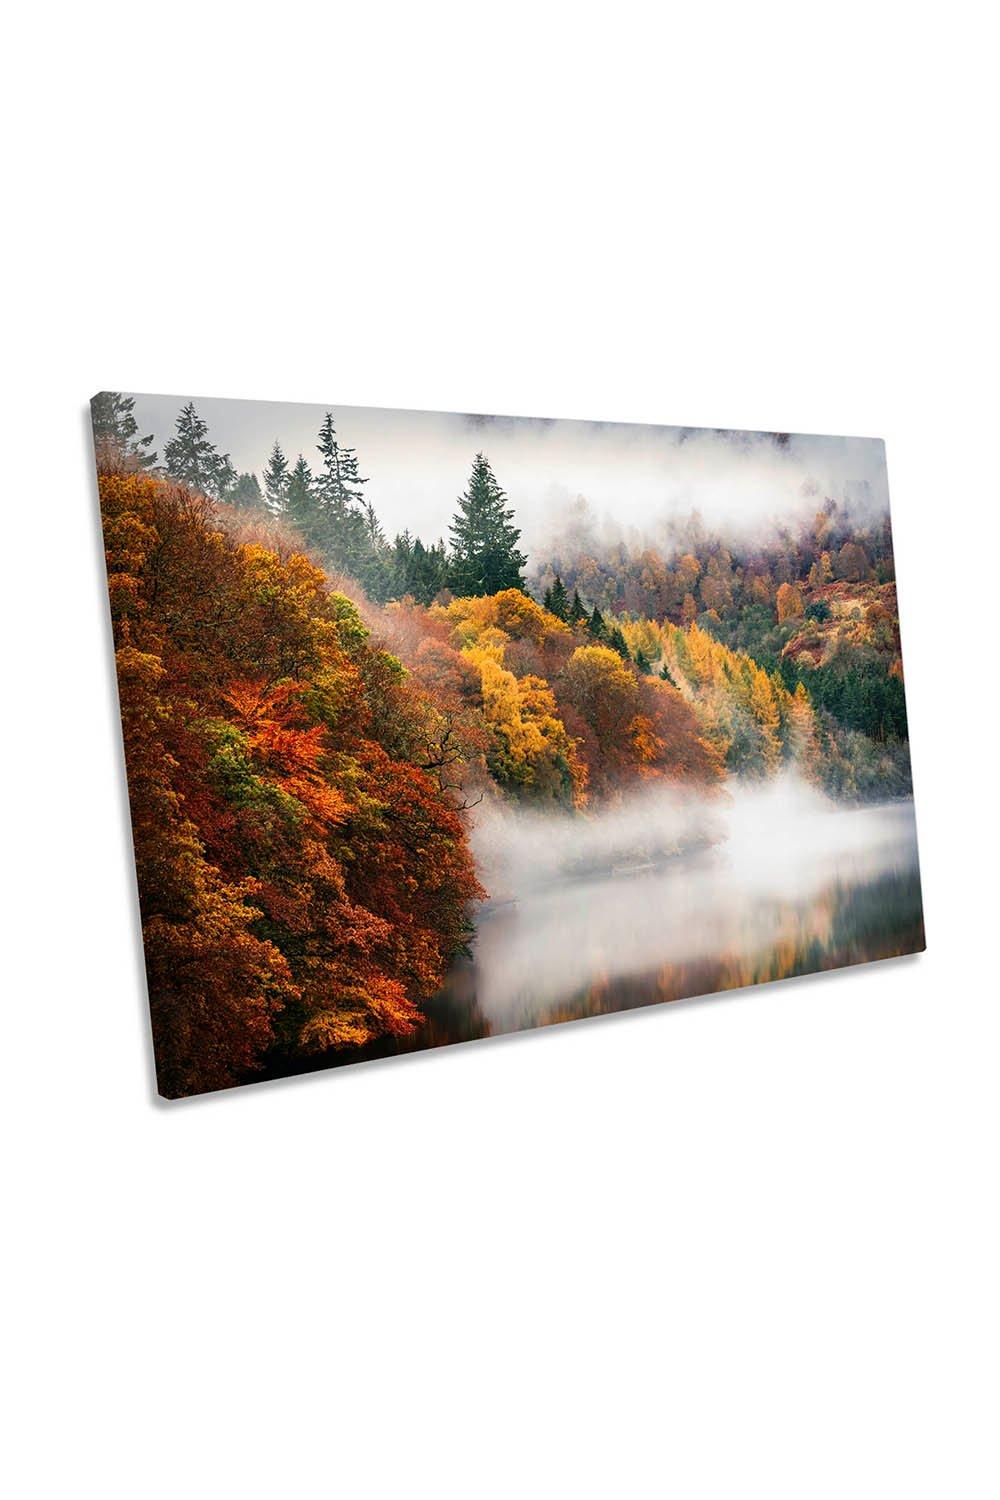 Faskally Autumn Misty Morning Scotland Canvas Wall Art Picture Print